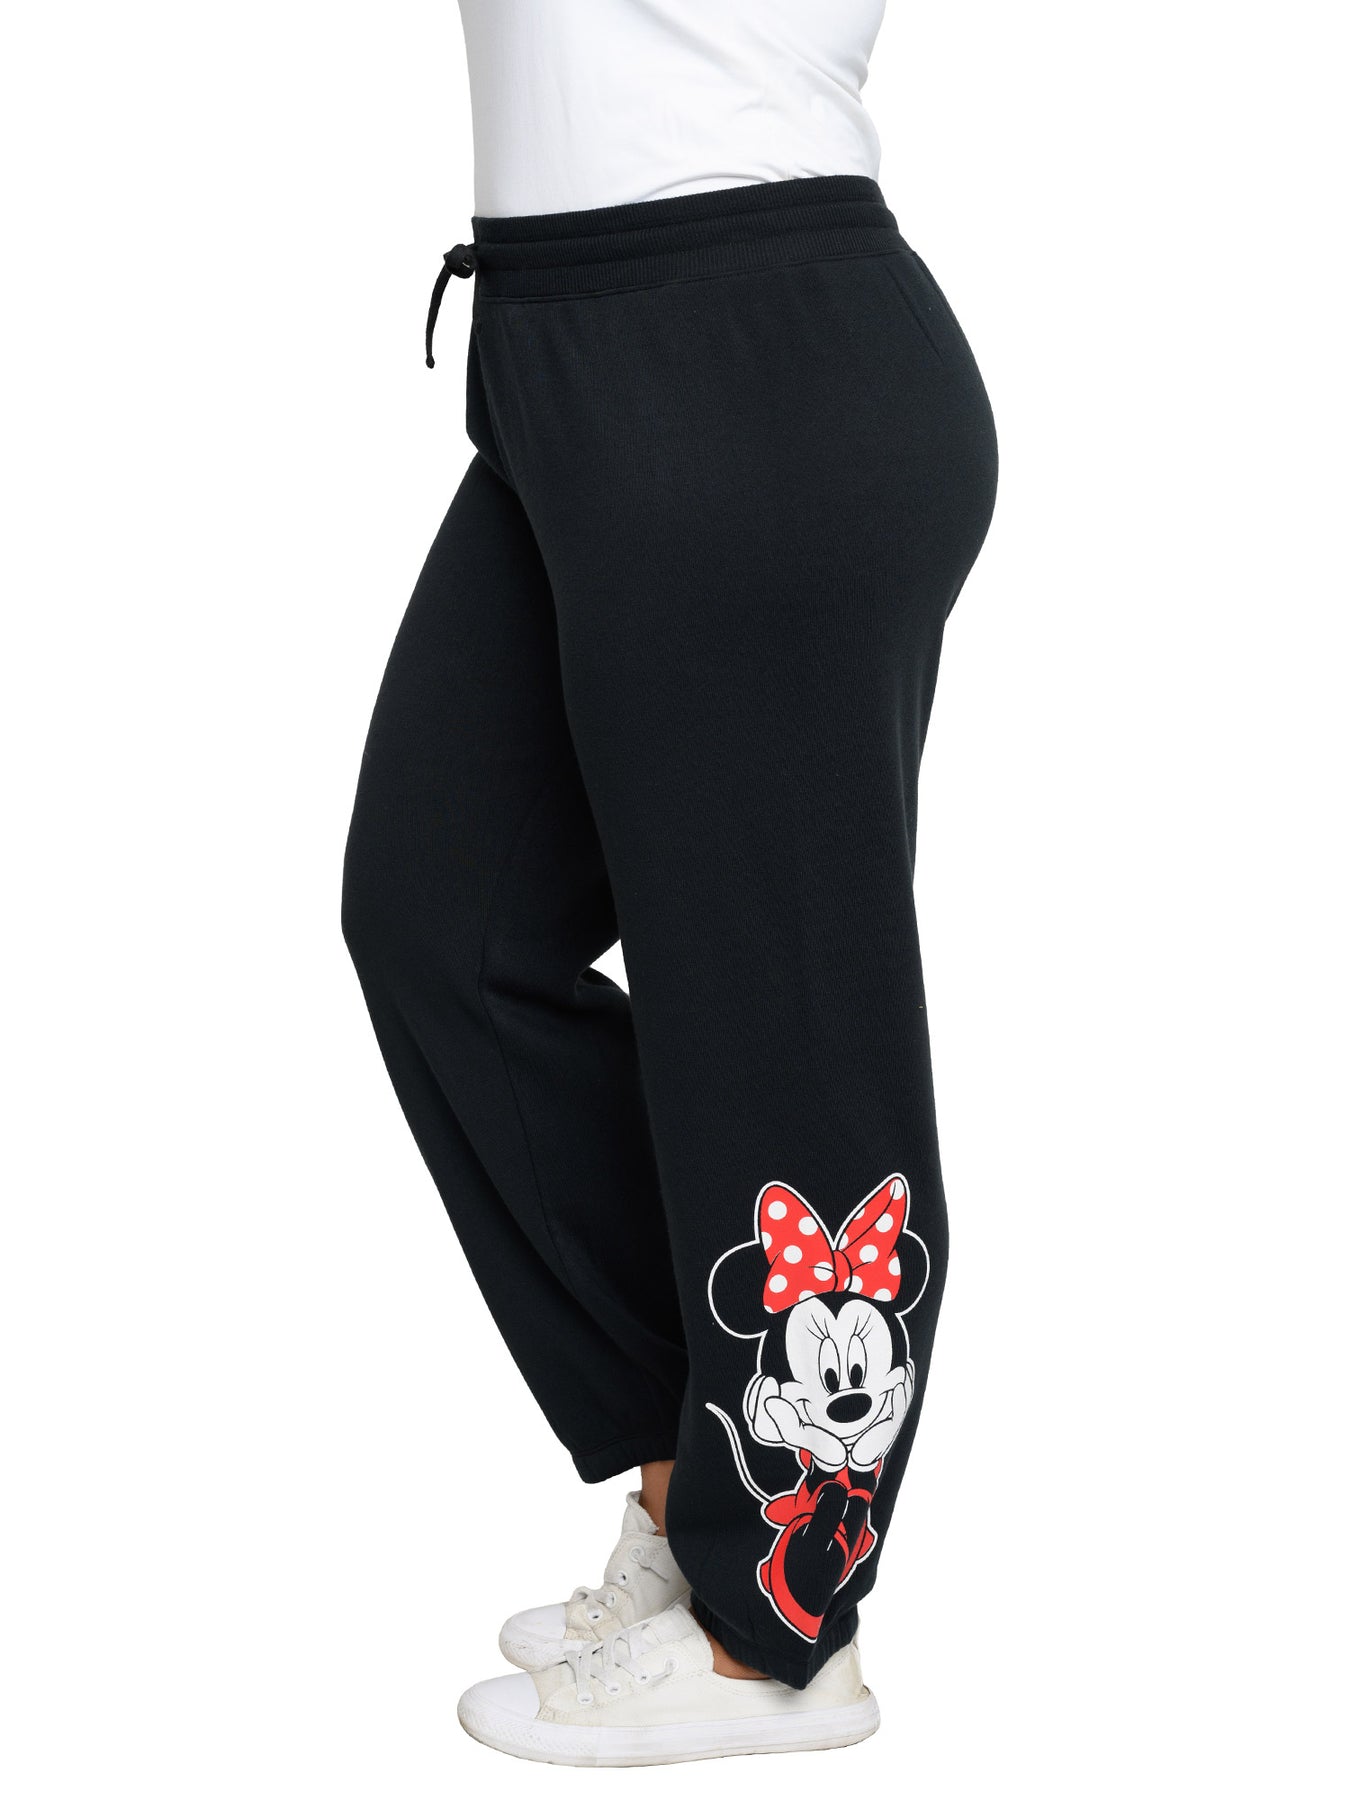 Disney Minnie Mouse Girls Jogger Sweatpants, 2-pack, Sizes 4-6X